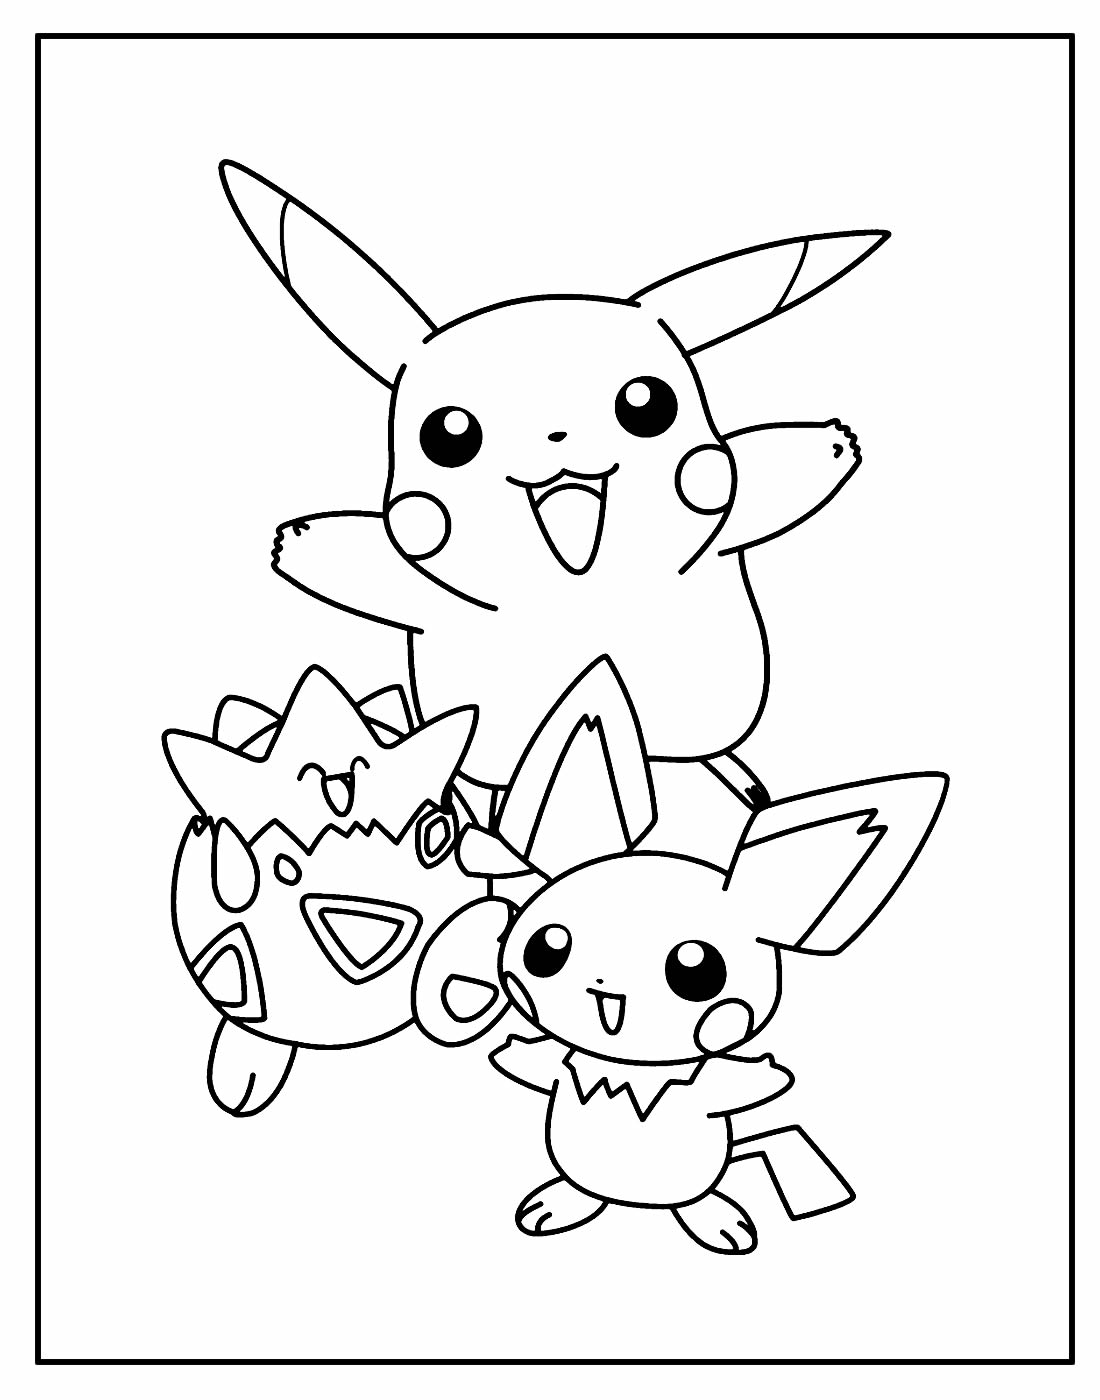 Página para colorir de Pokémon